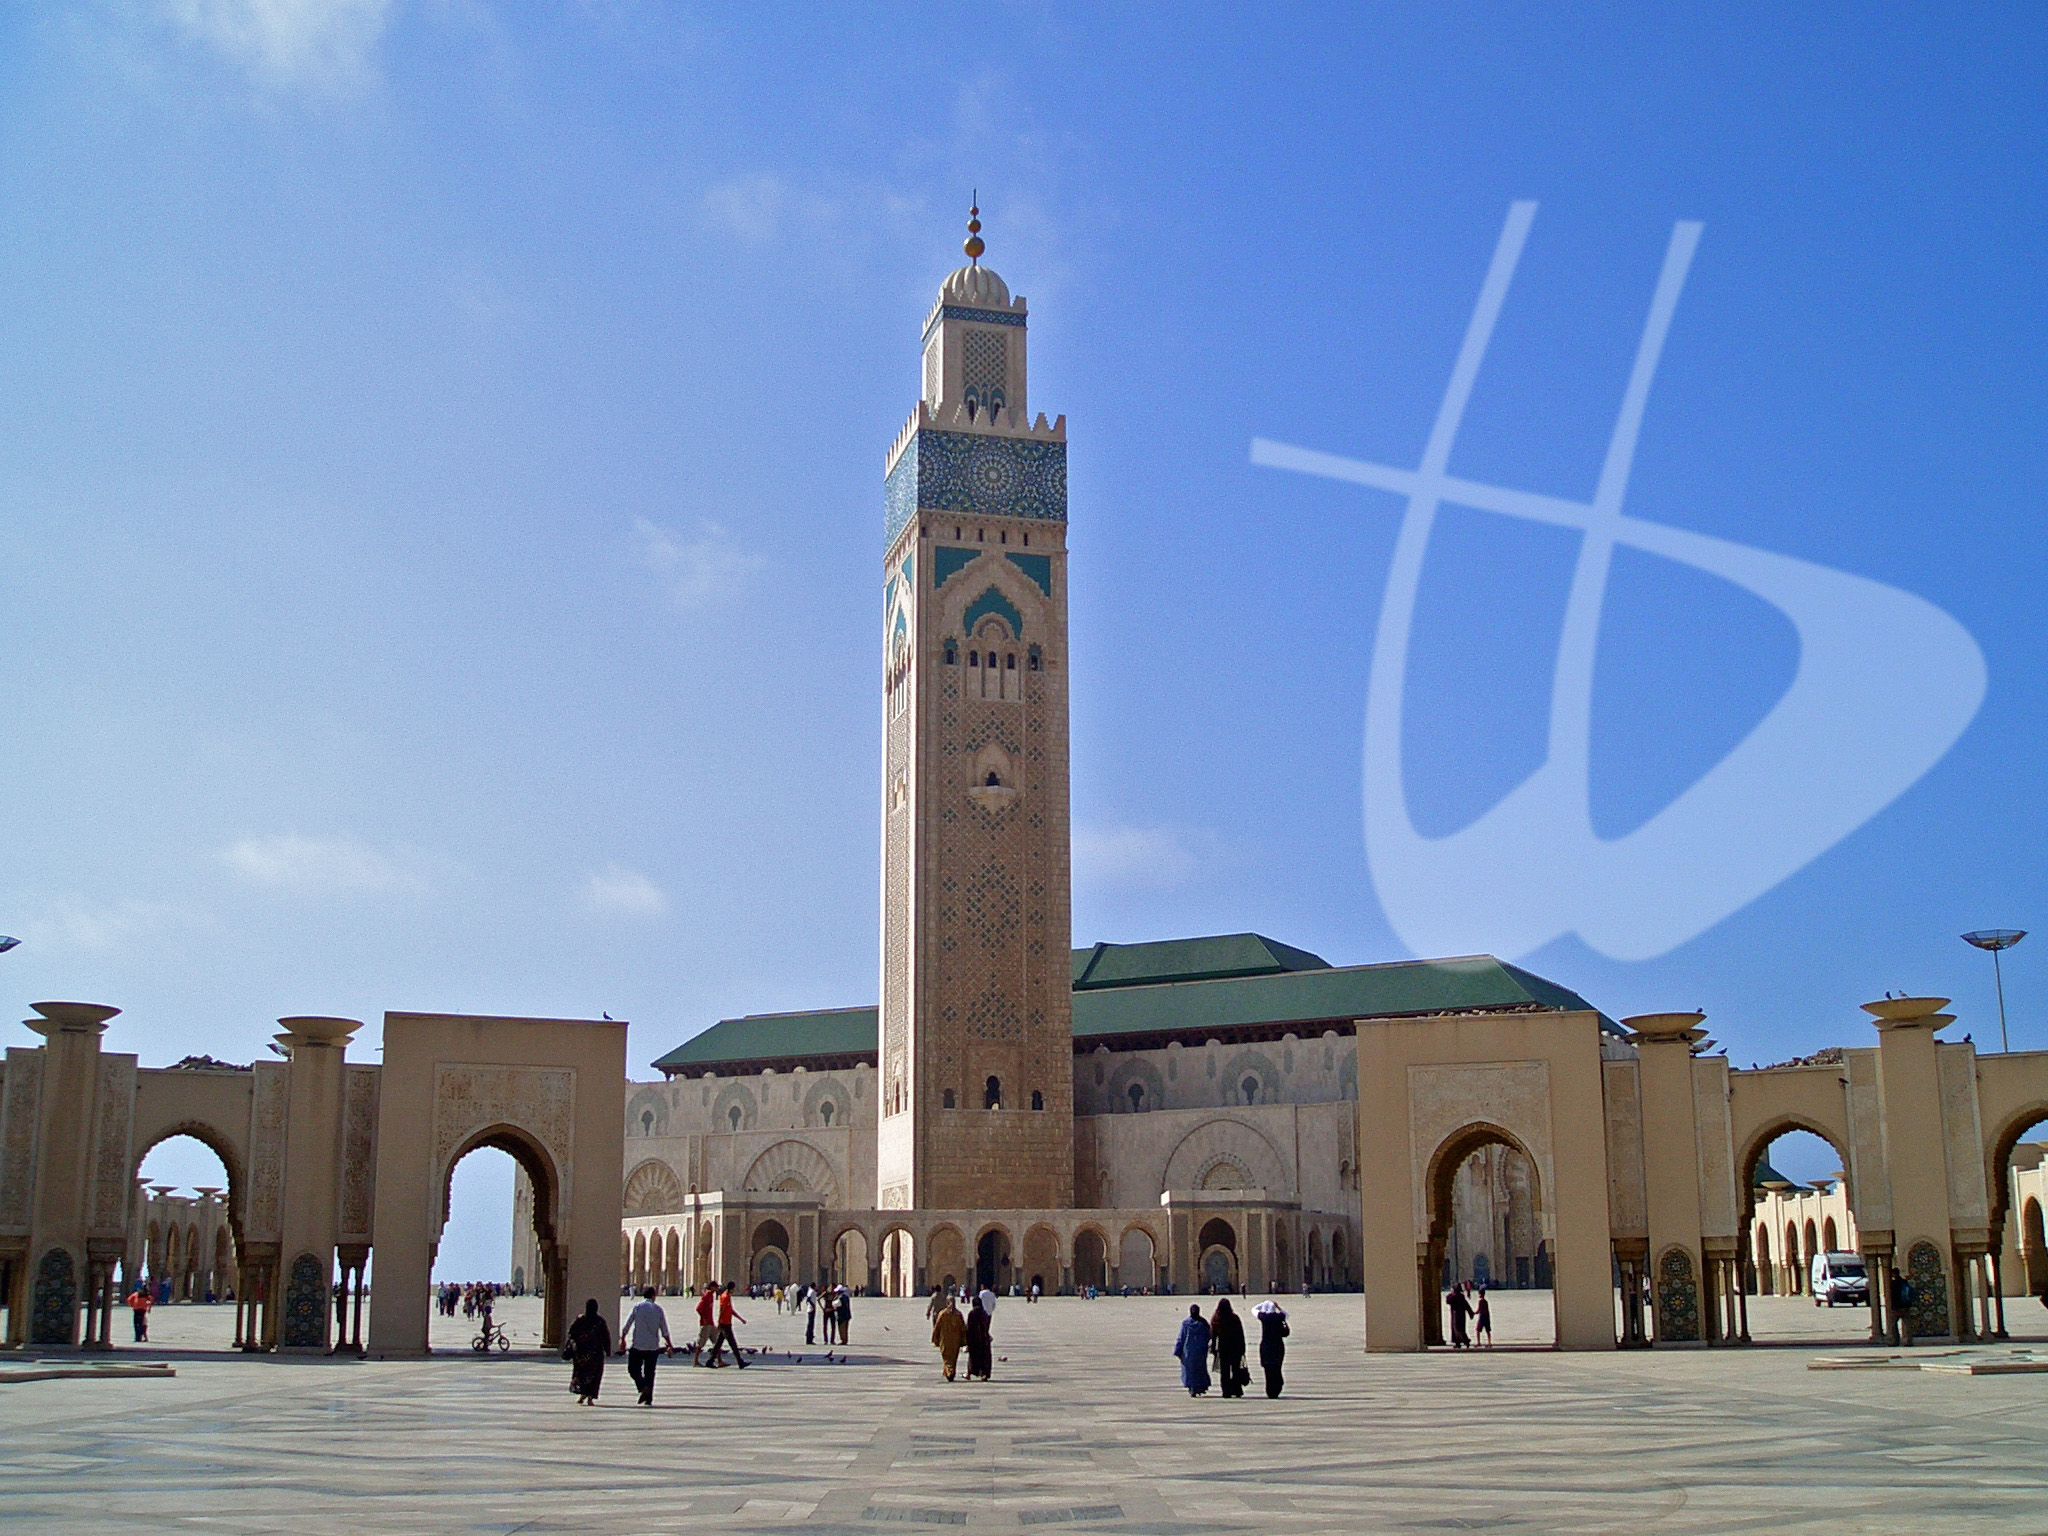 Casablanca - Moschea di Re Hassan II la più grande al mondo